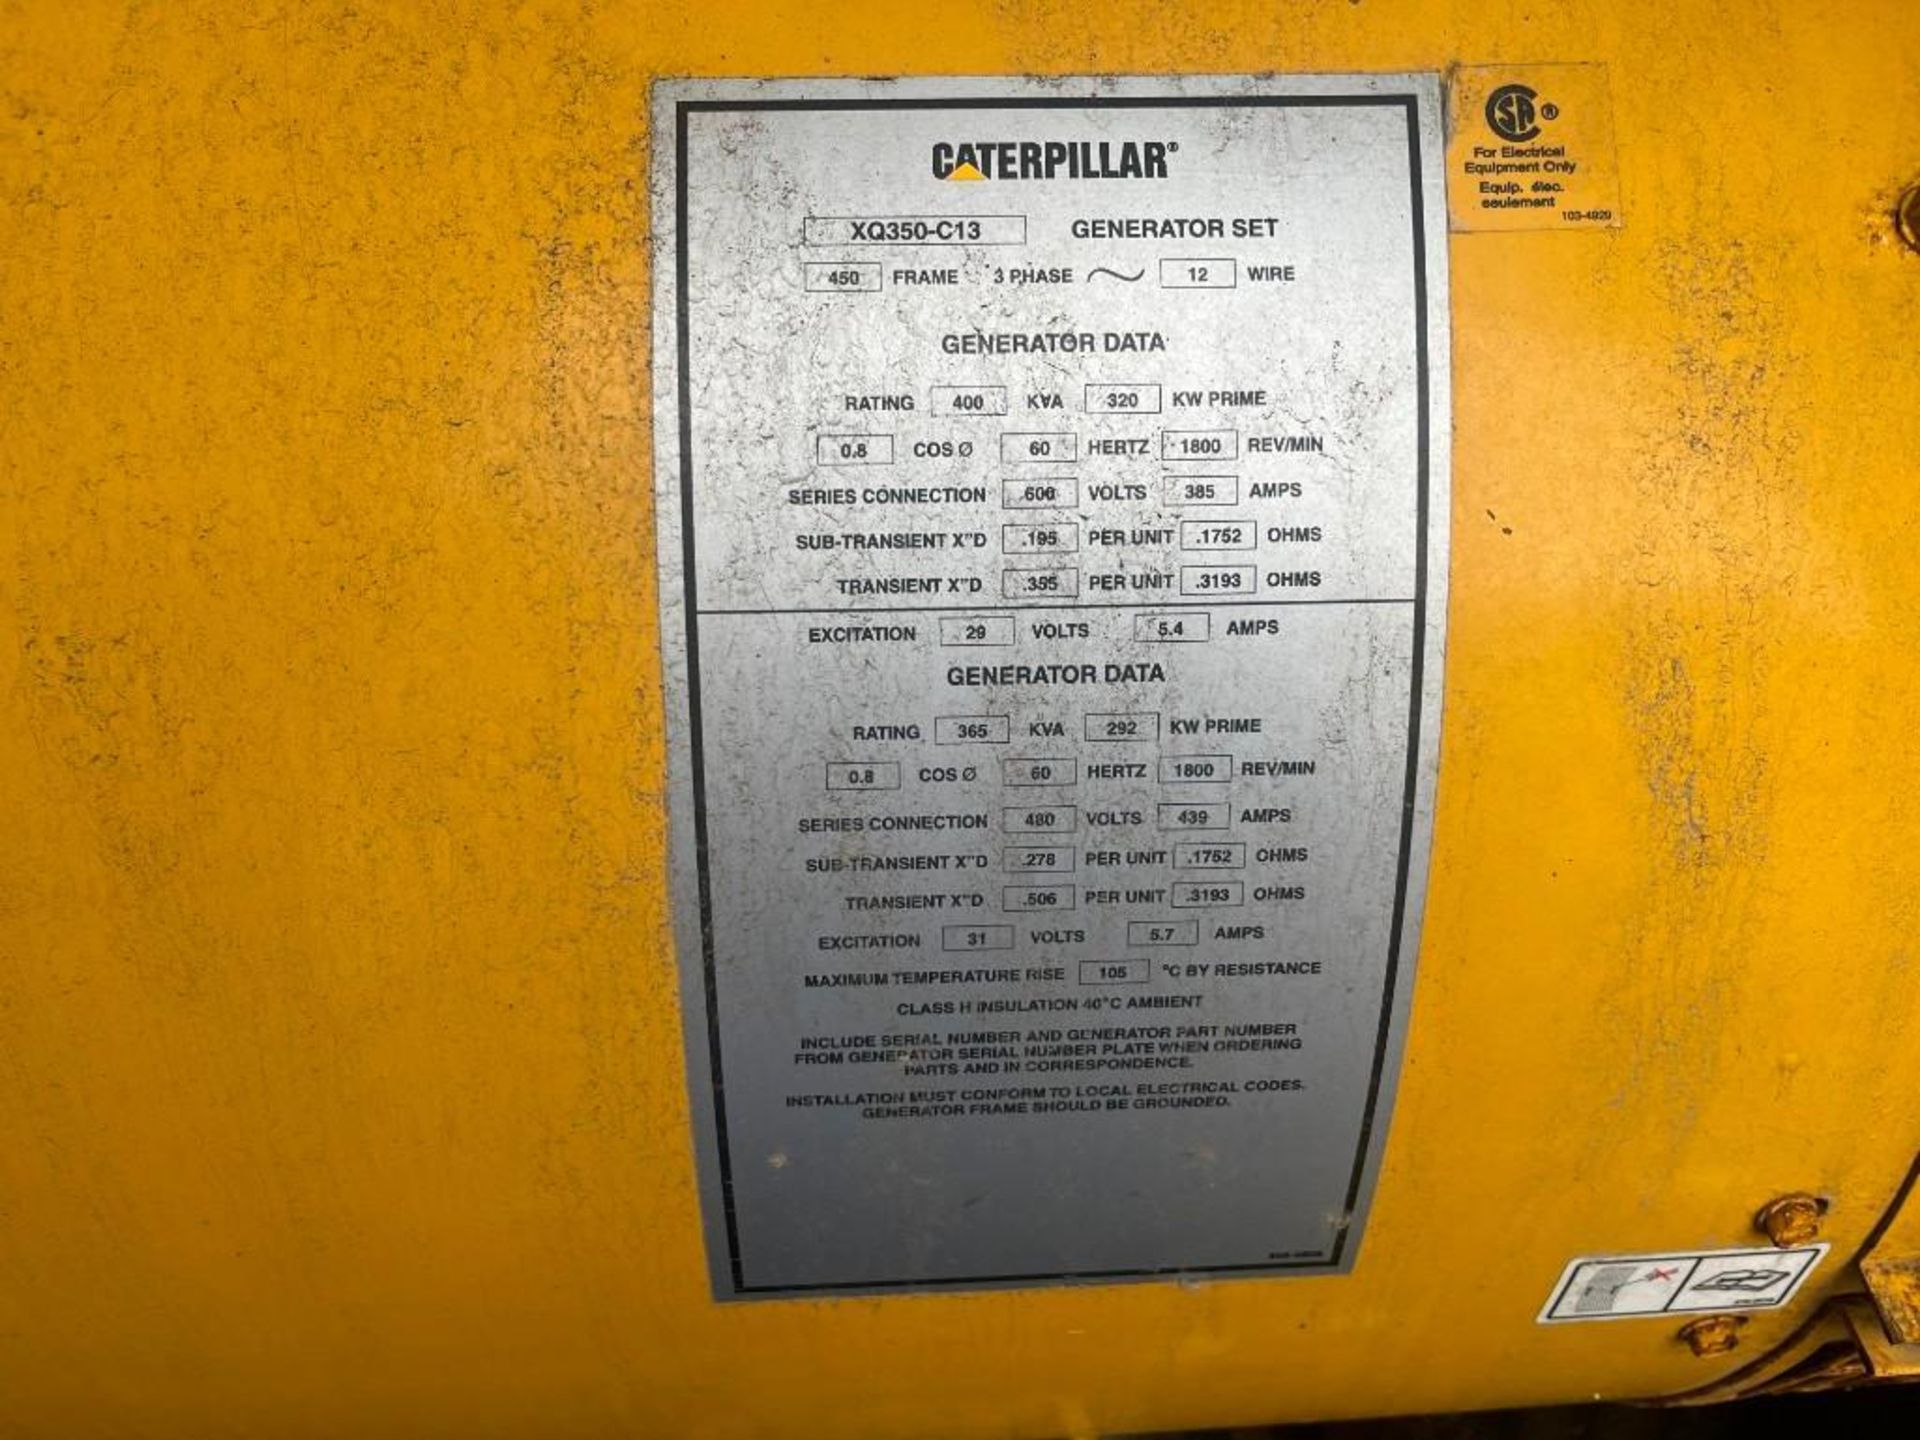 Caterpillar 320 KW Prime Portable / Trailered Diesel Generator Set, Model XQ350-C13, *No Title* - Image 15 of 33